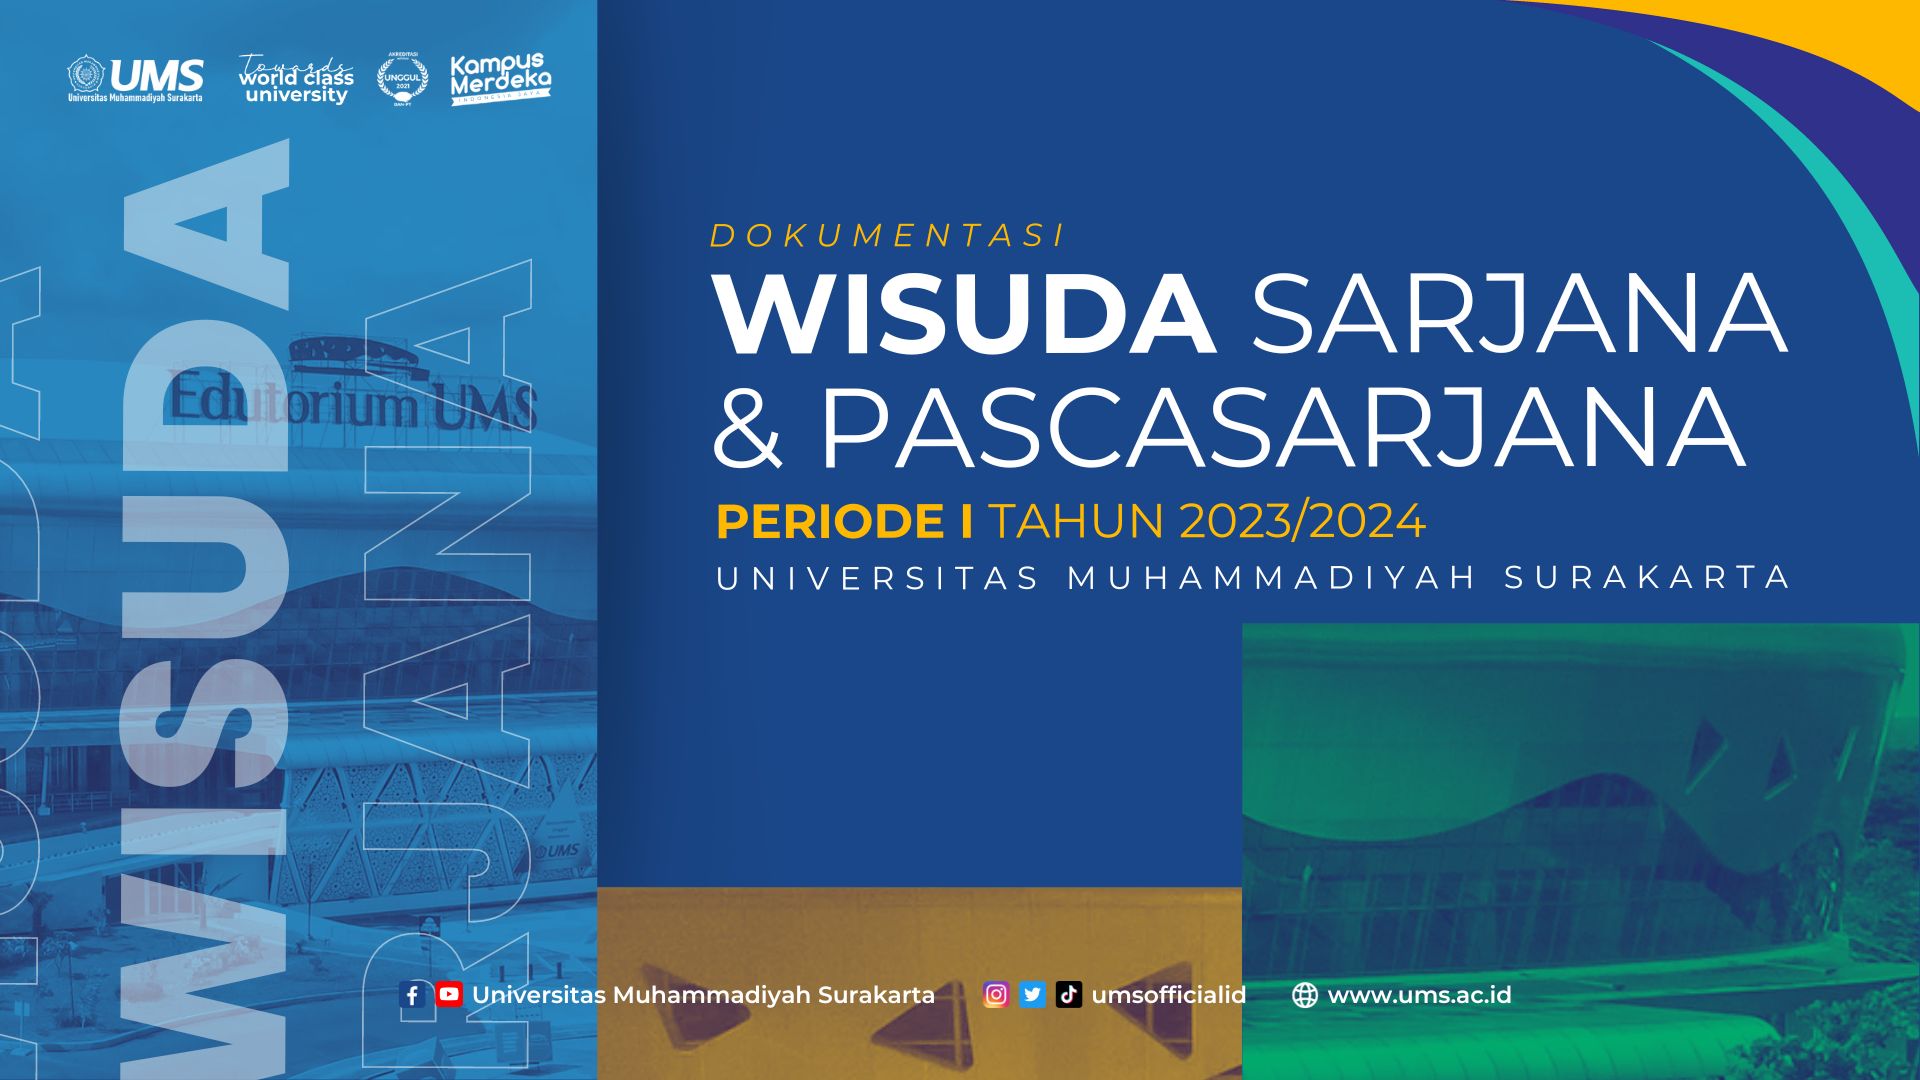 You are currently viewing Dokumentasi Wisuda UMS Periode I Tahun 2023/2024